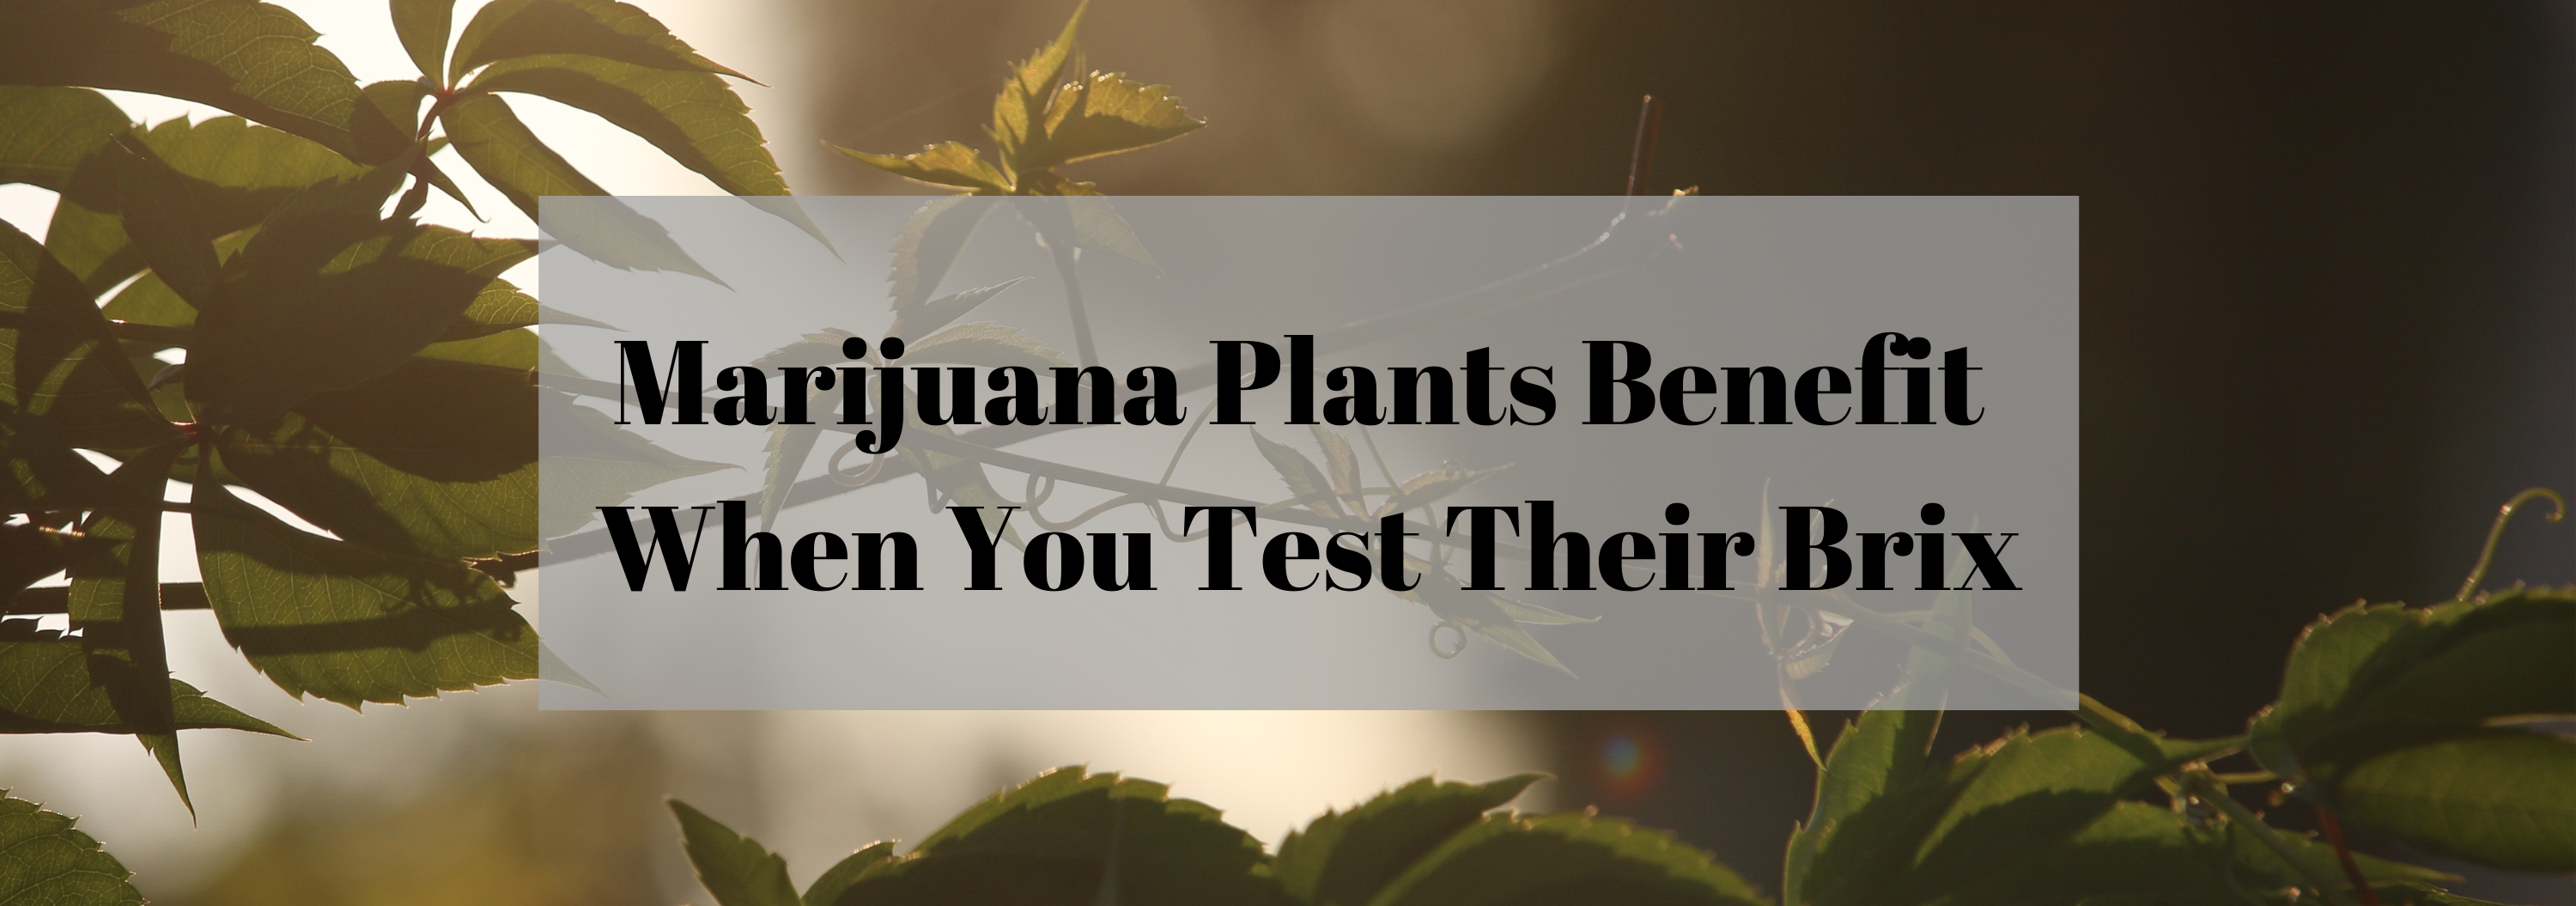 Marijuana Plants Benefit When You Test Their Brix